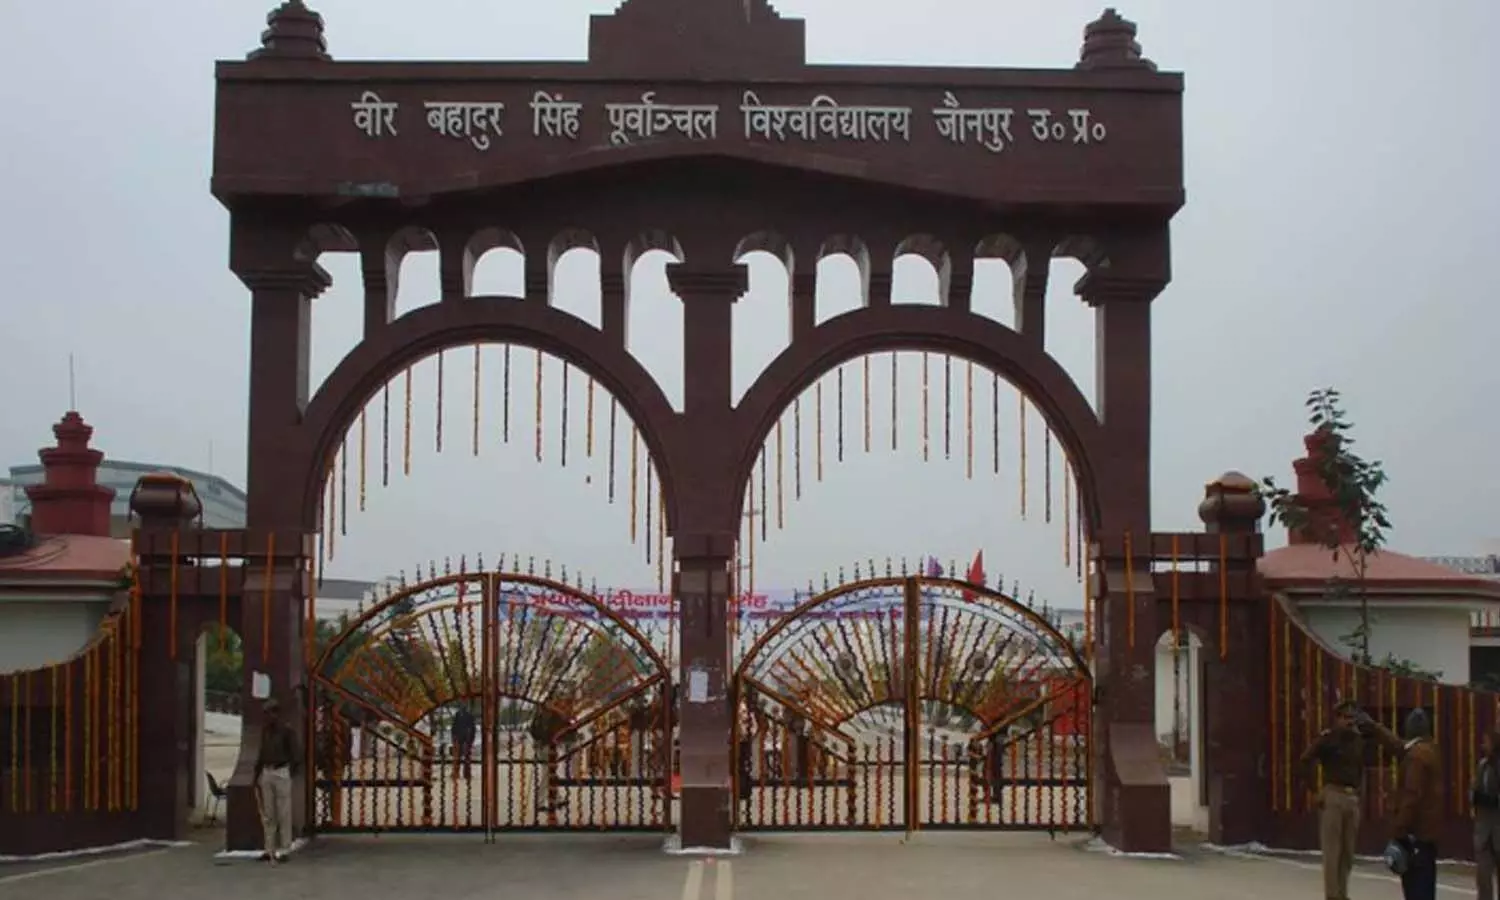 Hindi Day celebrated in Veer Bahadur Singh Purvanchal University